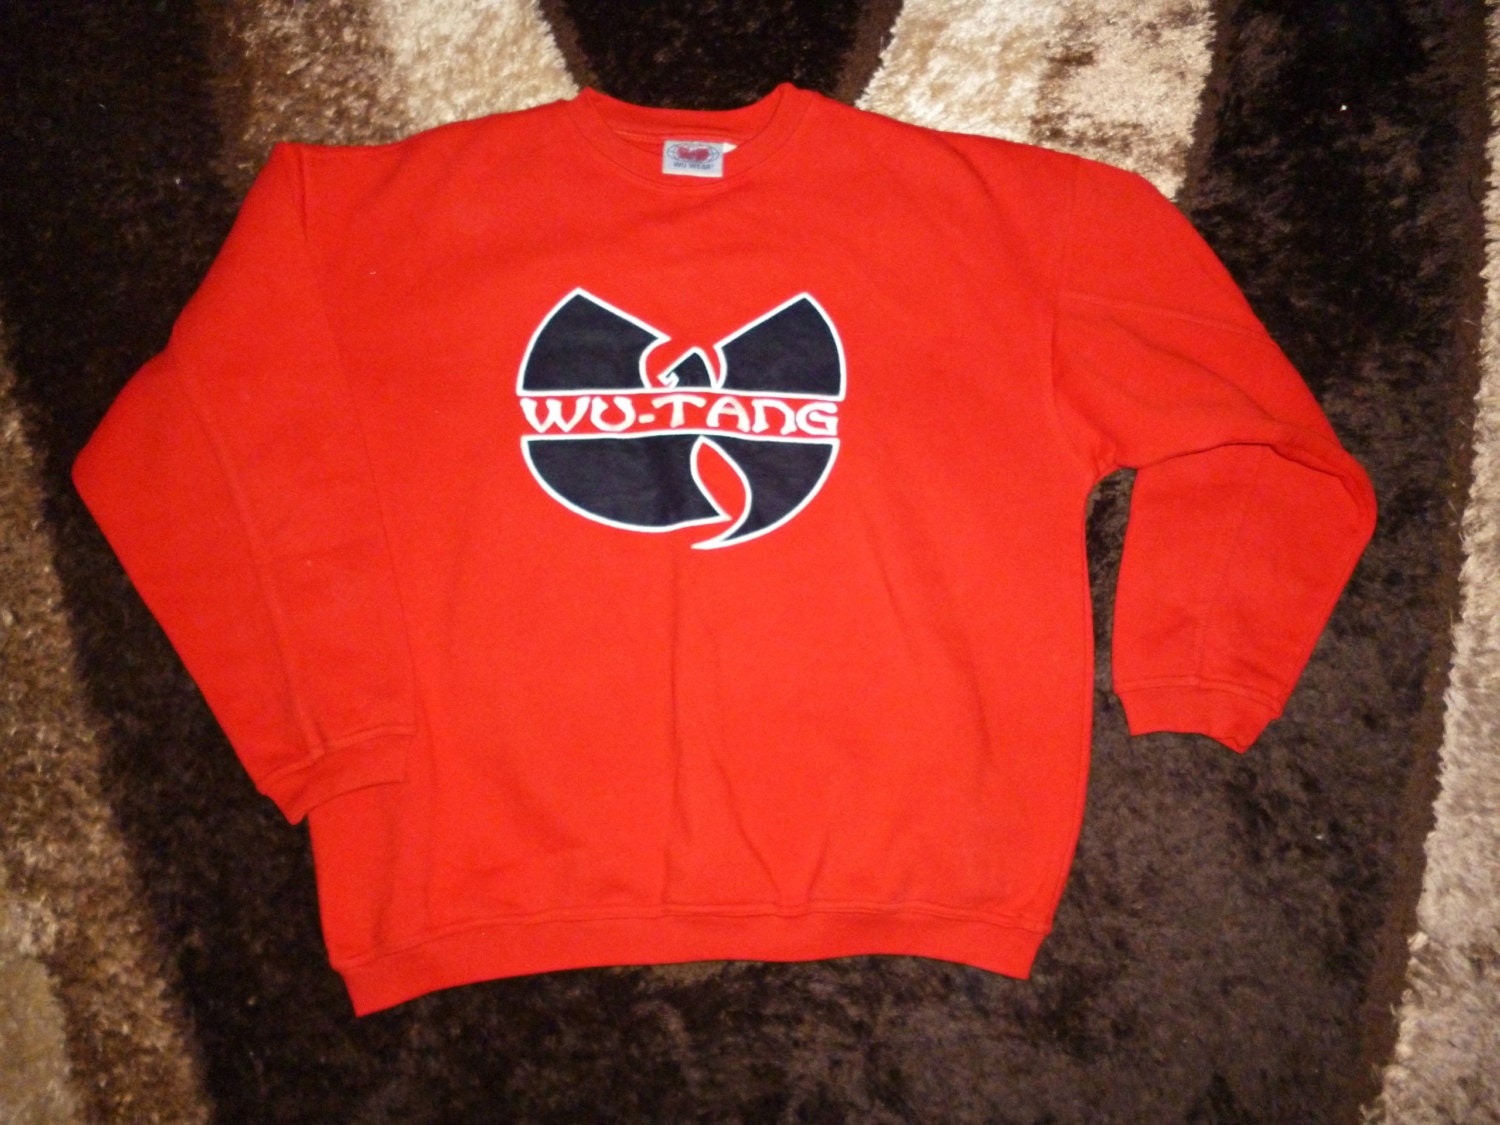 WU WEAR Sweatshirt, Wu Tang Jacket, Vintage Hip Hop Sweat Shirt, 1996 Sewn  Authentic Wu Tang Clan Jersey 90s Gangsta Rap Size XL - Etsy